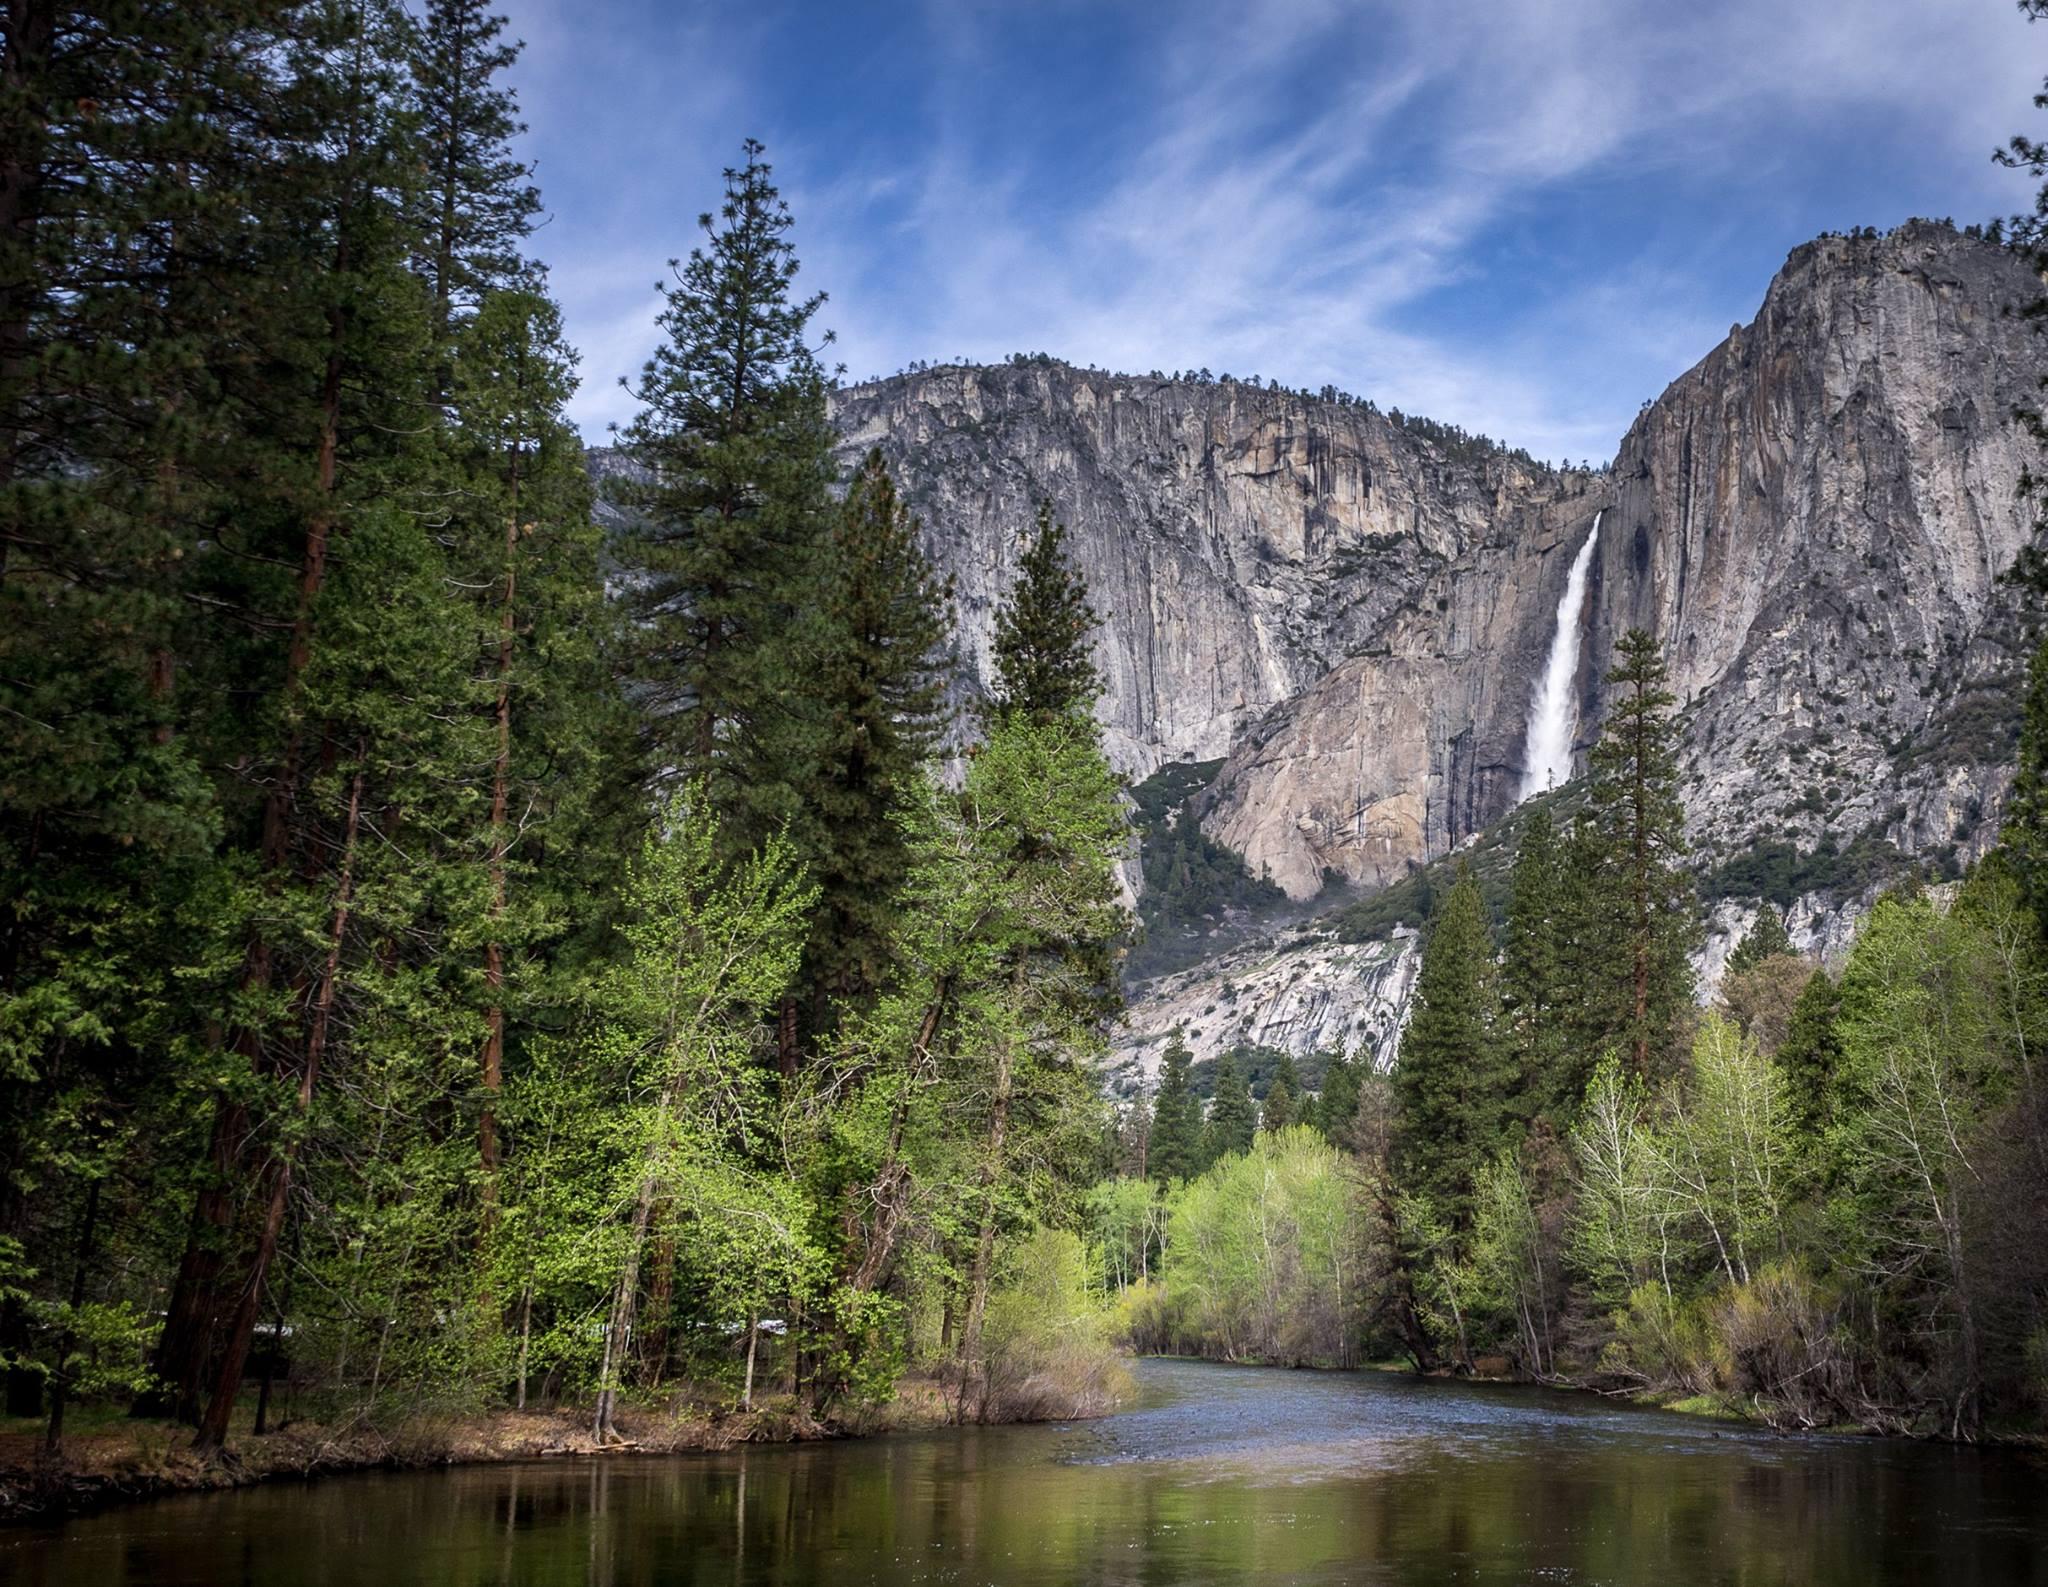 Yosemite National Park - Upper Yosemite Fall and Merced River in spring - Credits: NPS Photo